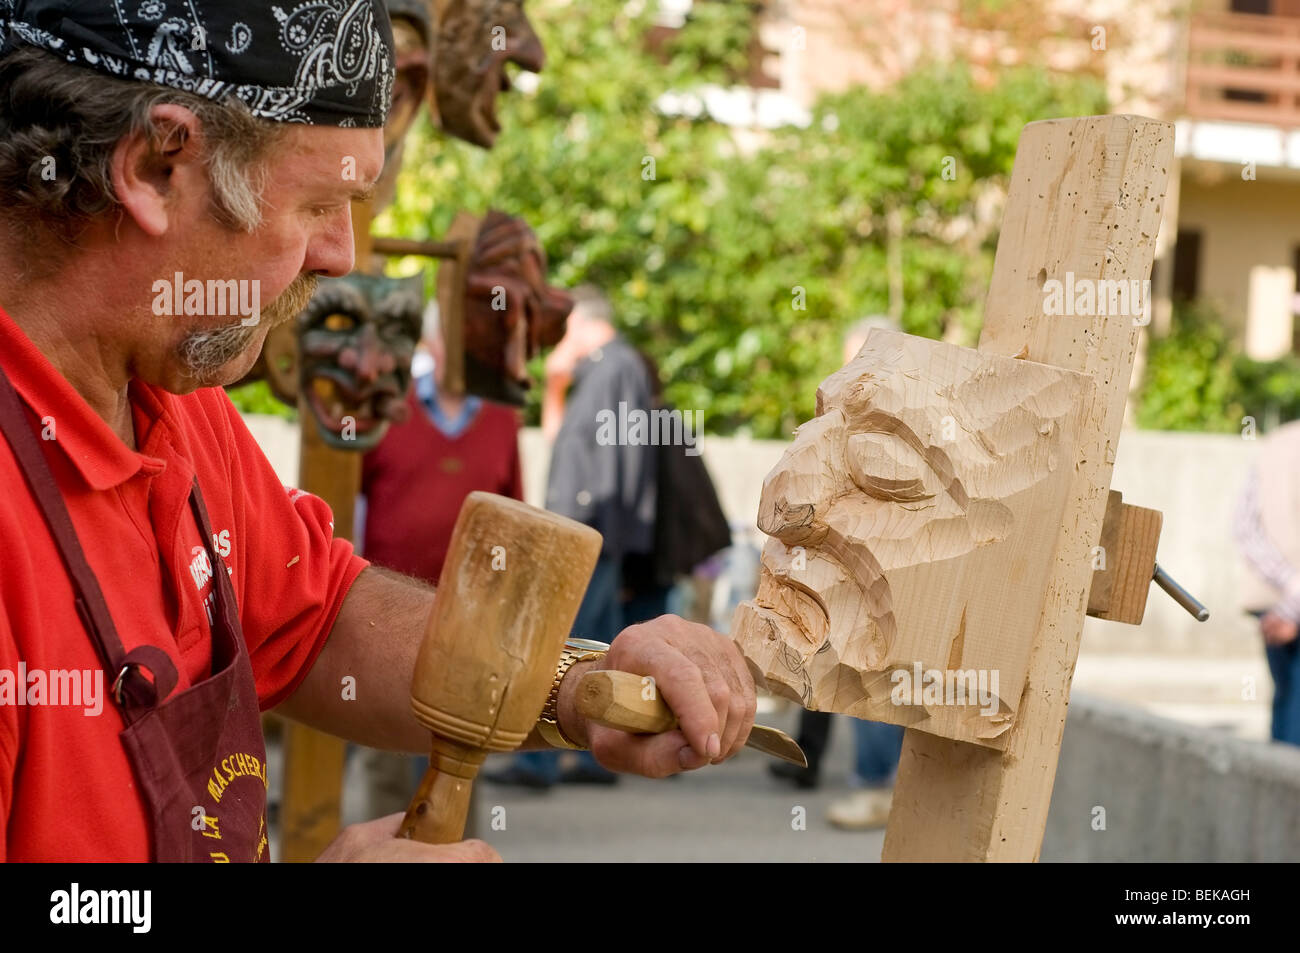 Holzschnitzer in Aktion Stockfoto